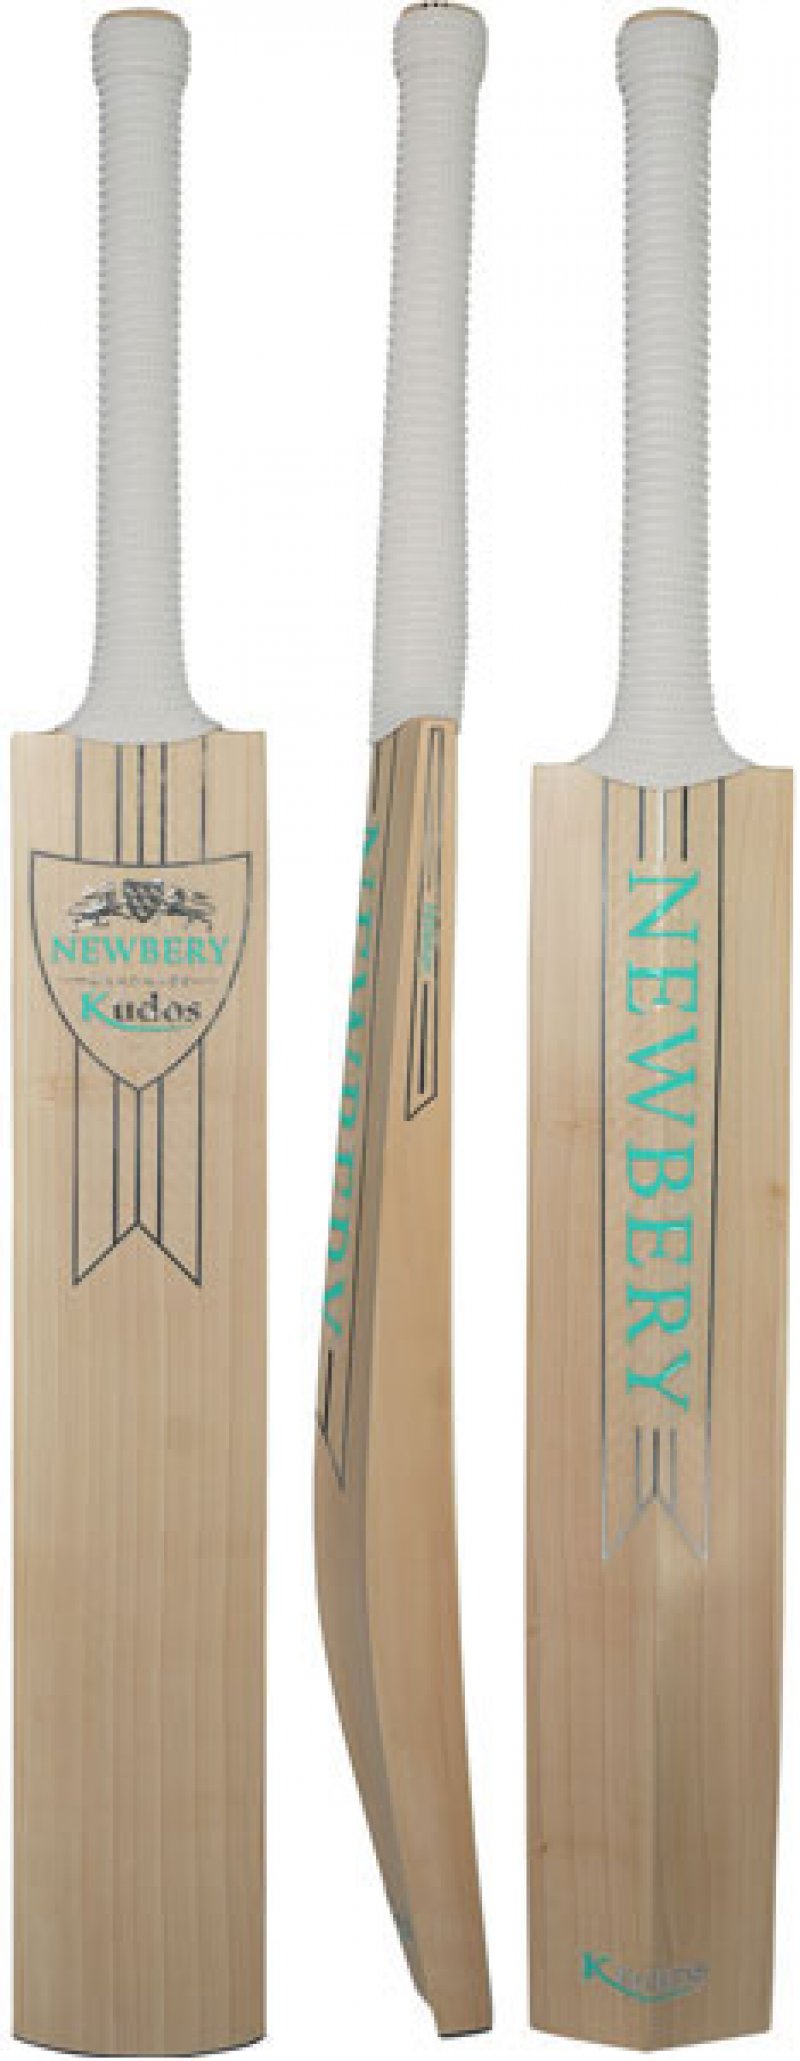 Newbery Kudos 5 Star Junior Cricket Bat